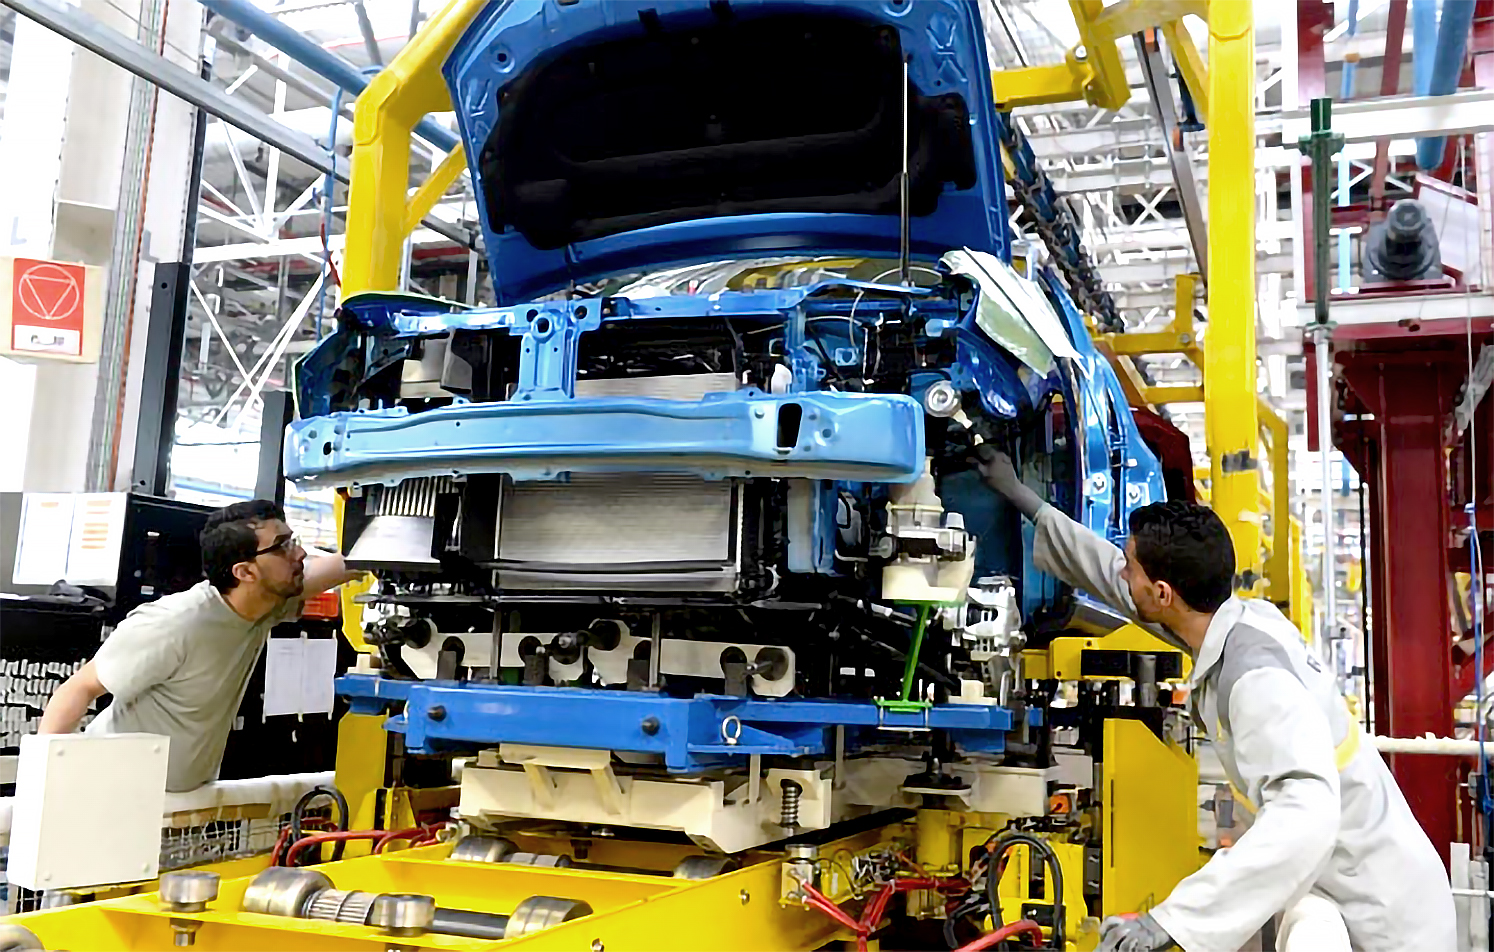 Morocco: Leads Auto Industry in Africa Despite Covid-19